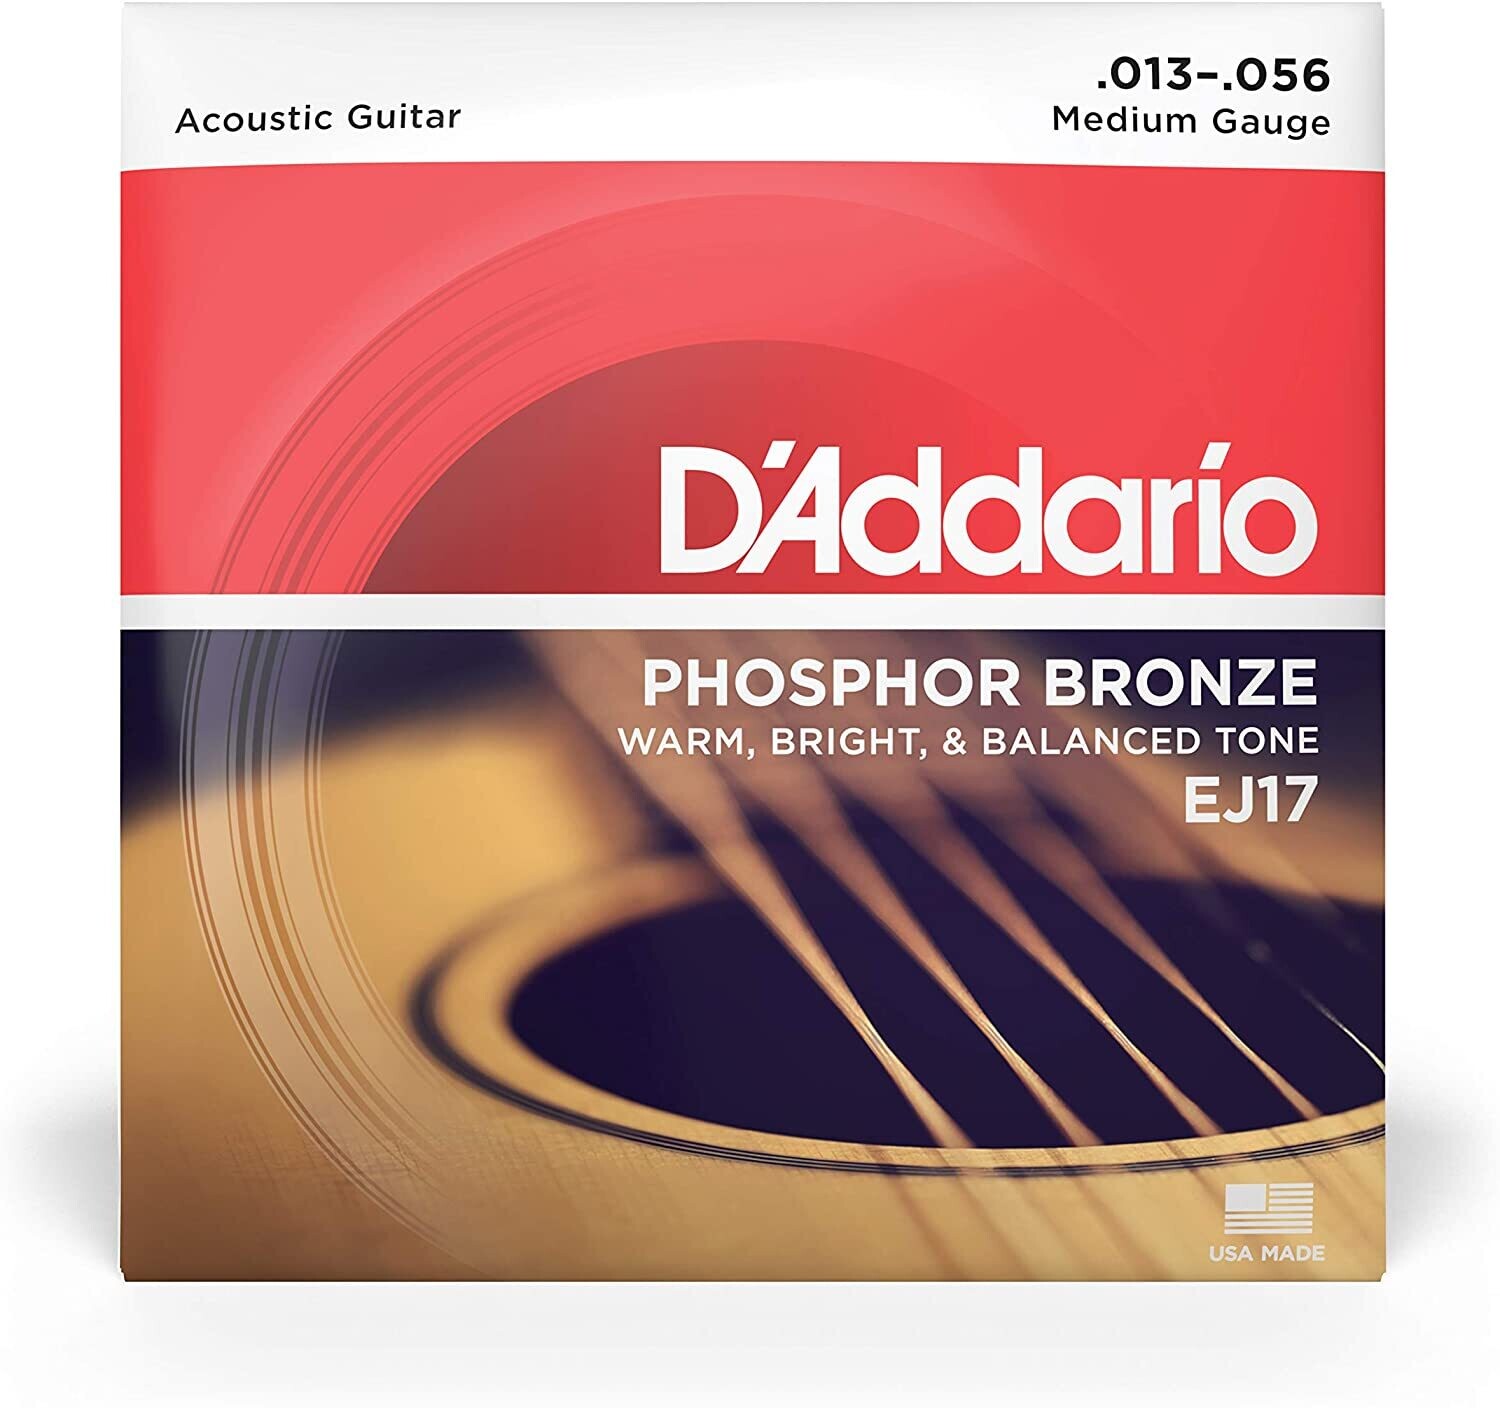 D'Addario Guitar Strings - Acoustic Guitar Strings - Phosphor Bronze - For 6 String Guitar - Warm, Bright, Balanced Tone - EJ17 - Medium, 13-56